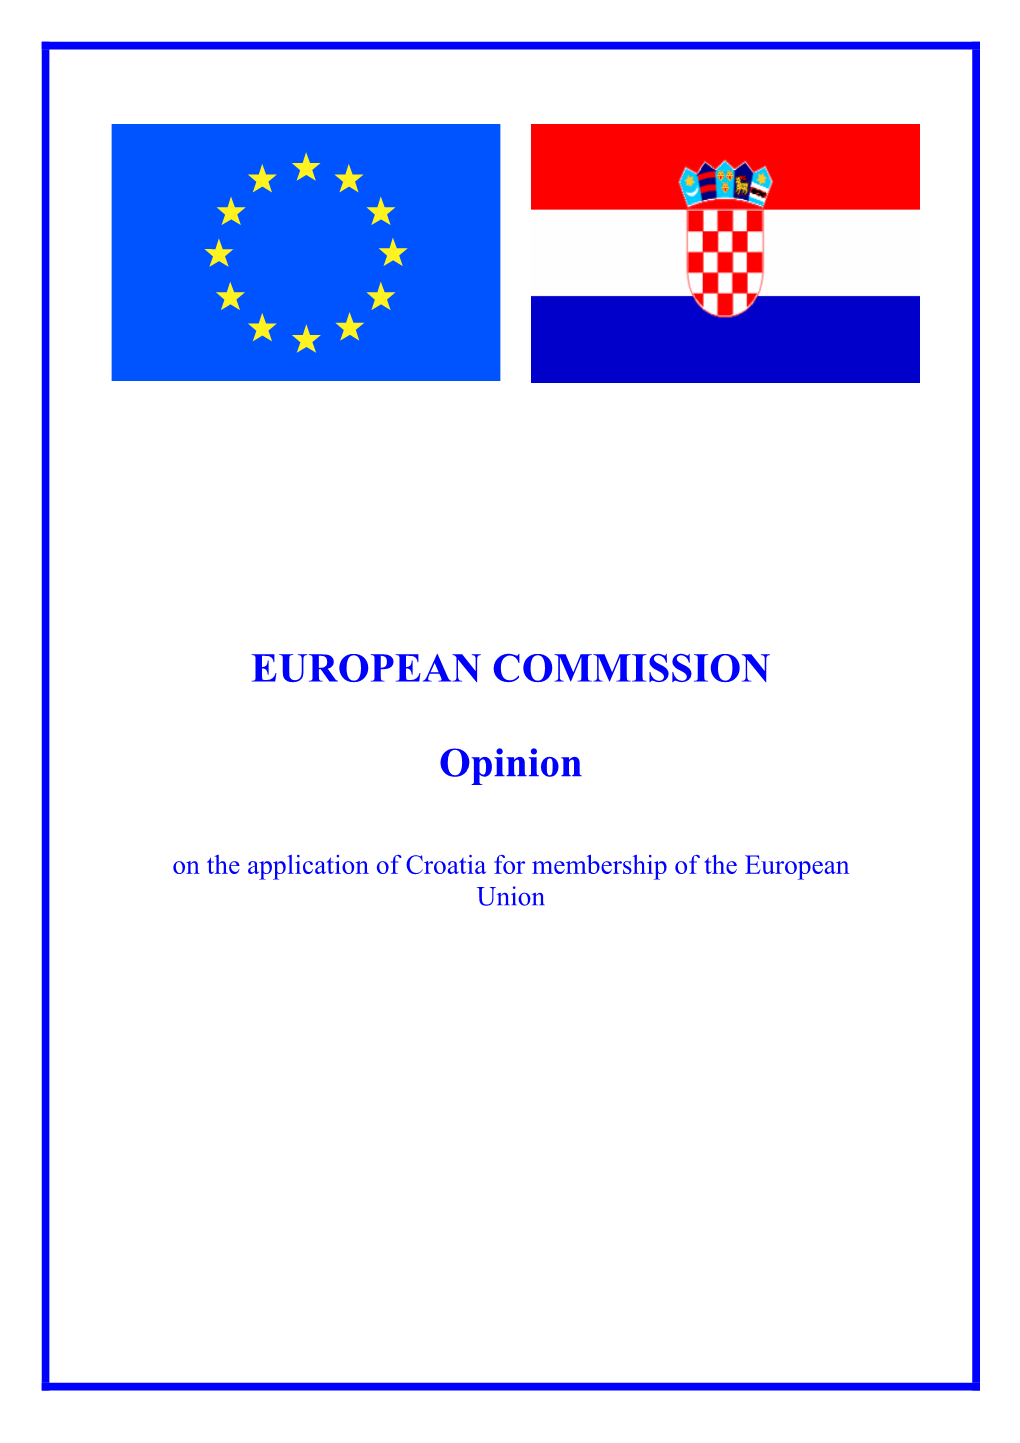 Opinion on Croatia's Application for Membership of the European Union